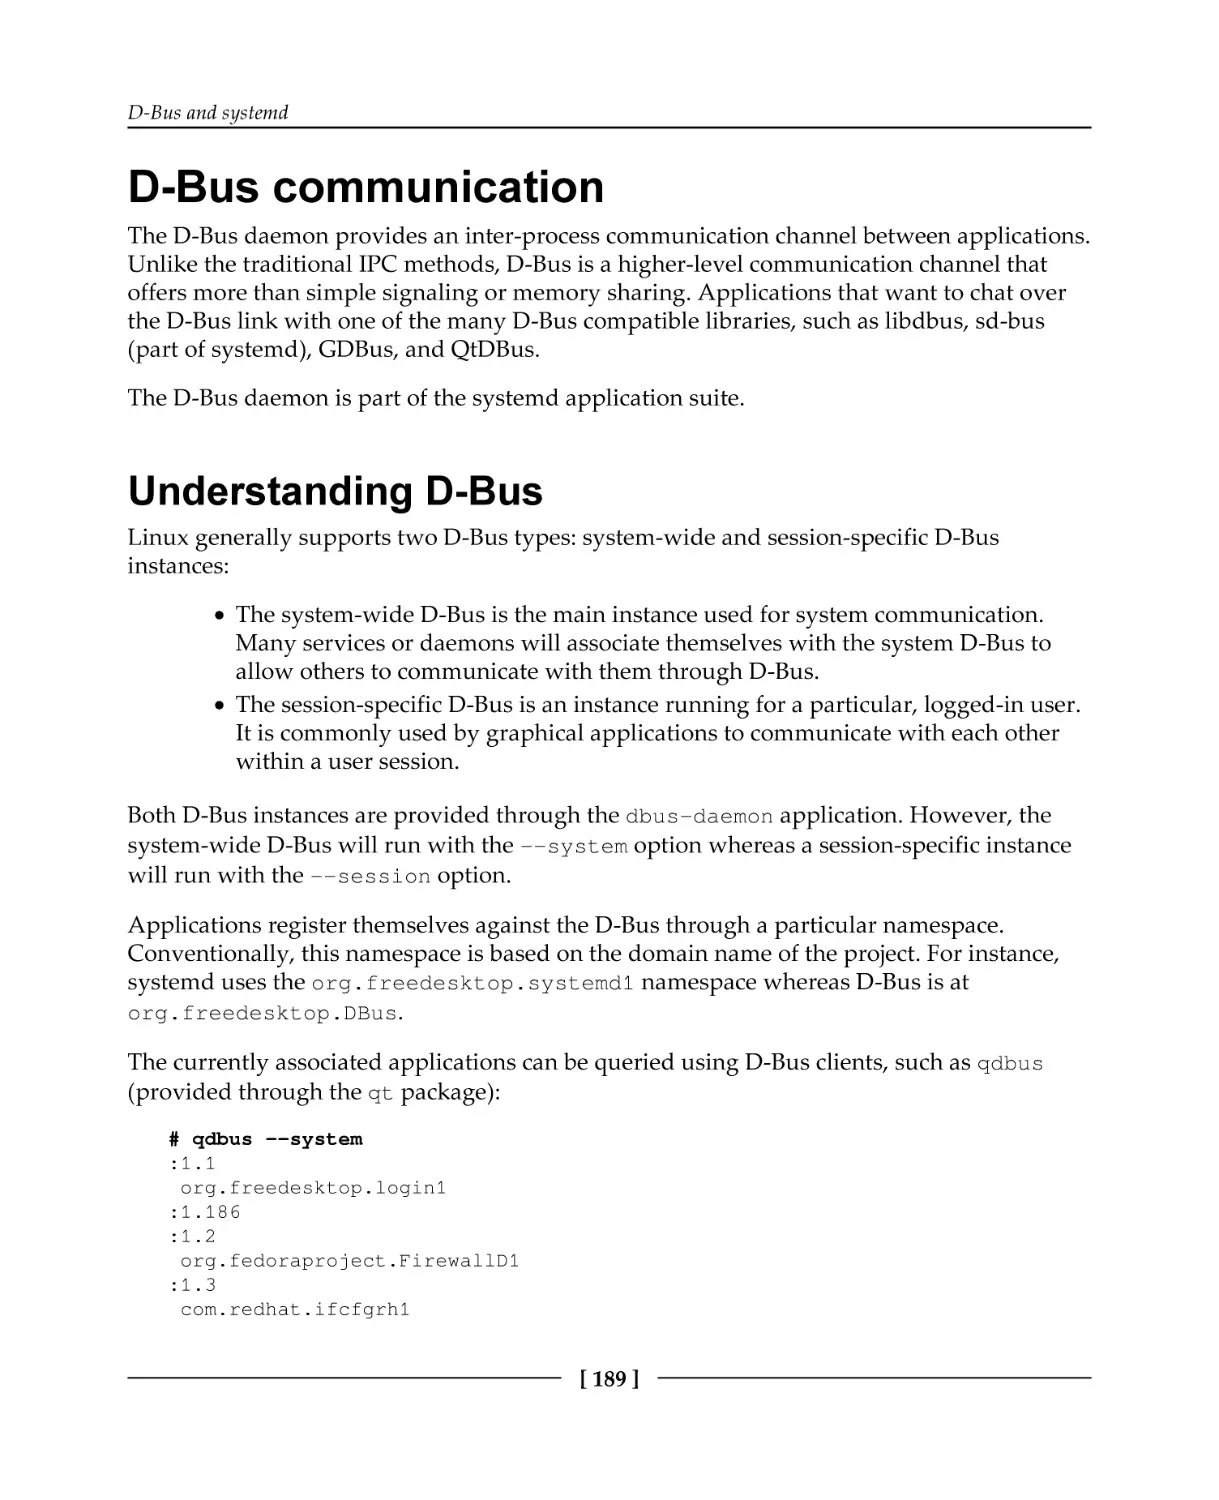 D-Bus communication
Understanding D-Bus